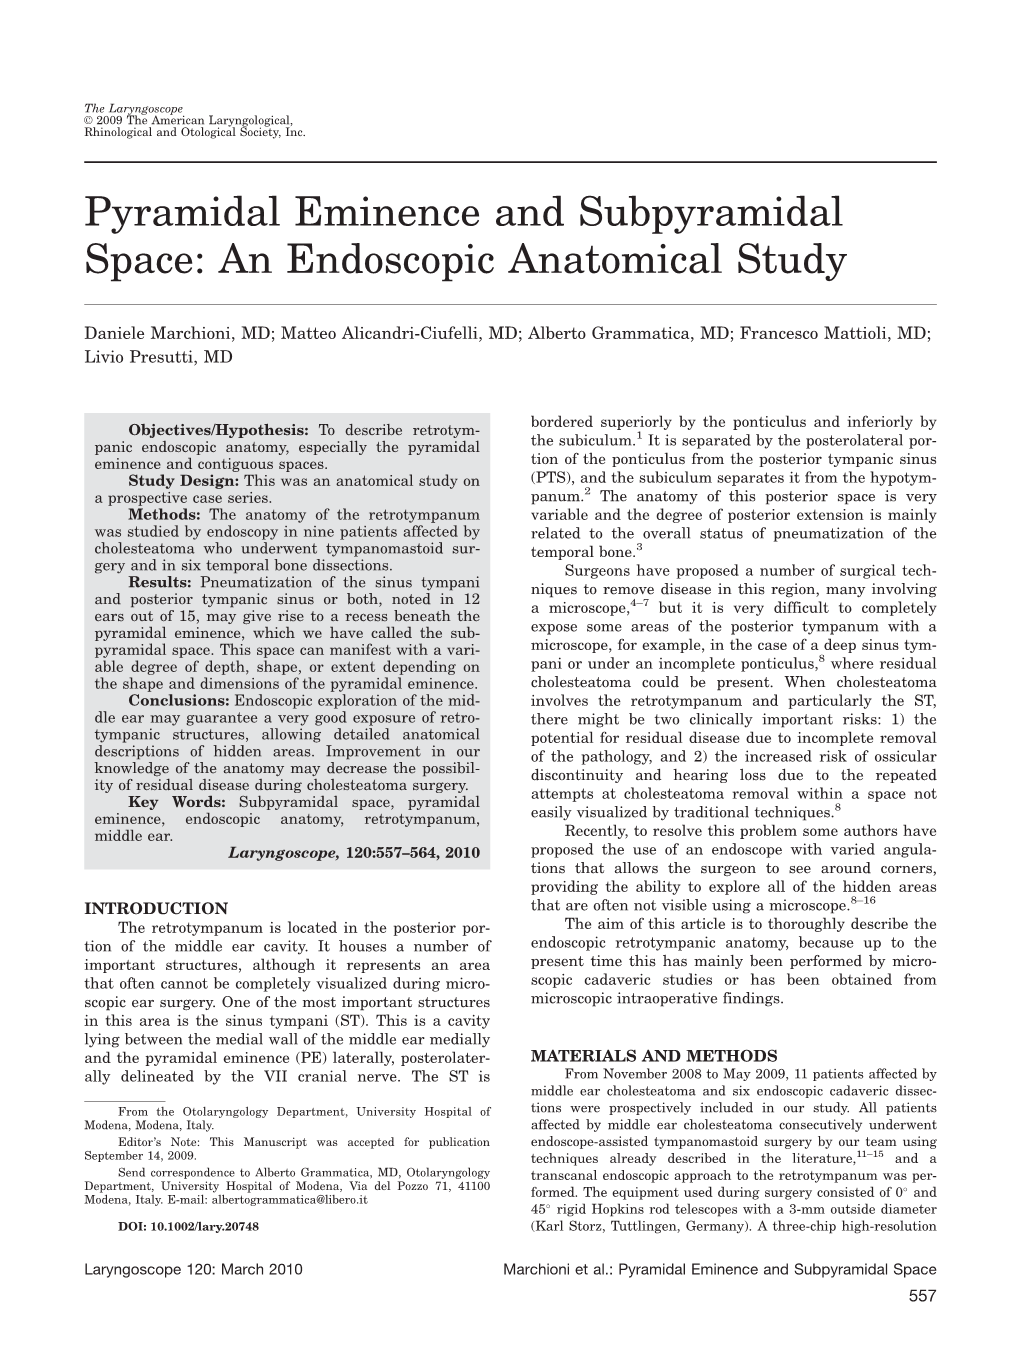 Pyramidal Eminence and Subpyramidal Space: an Endoscopic Anatomical Study